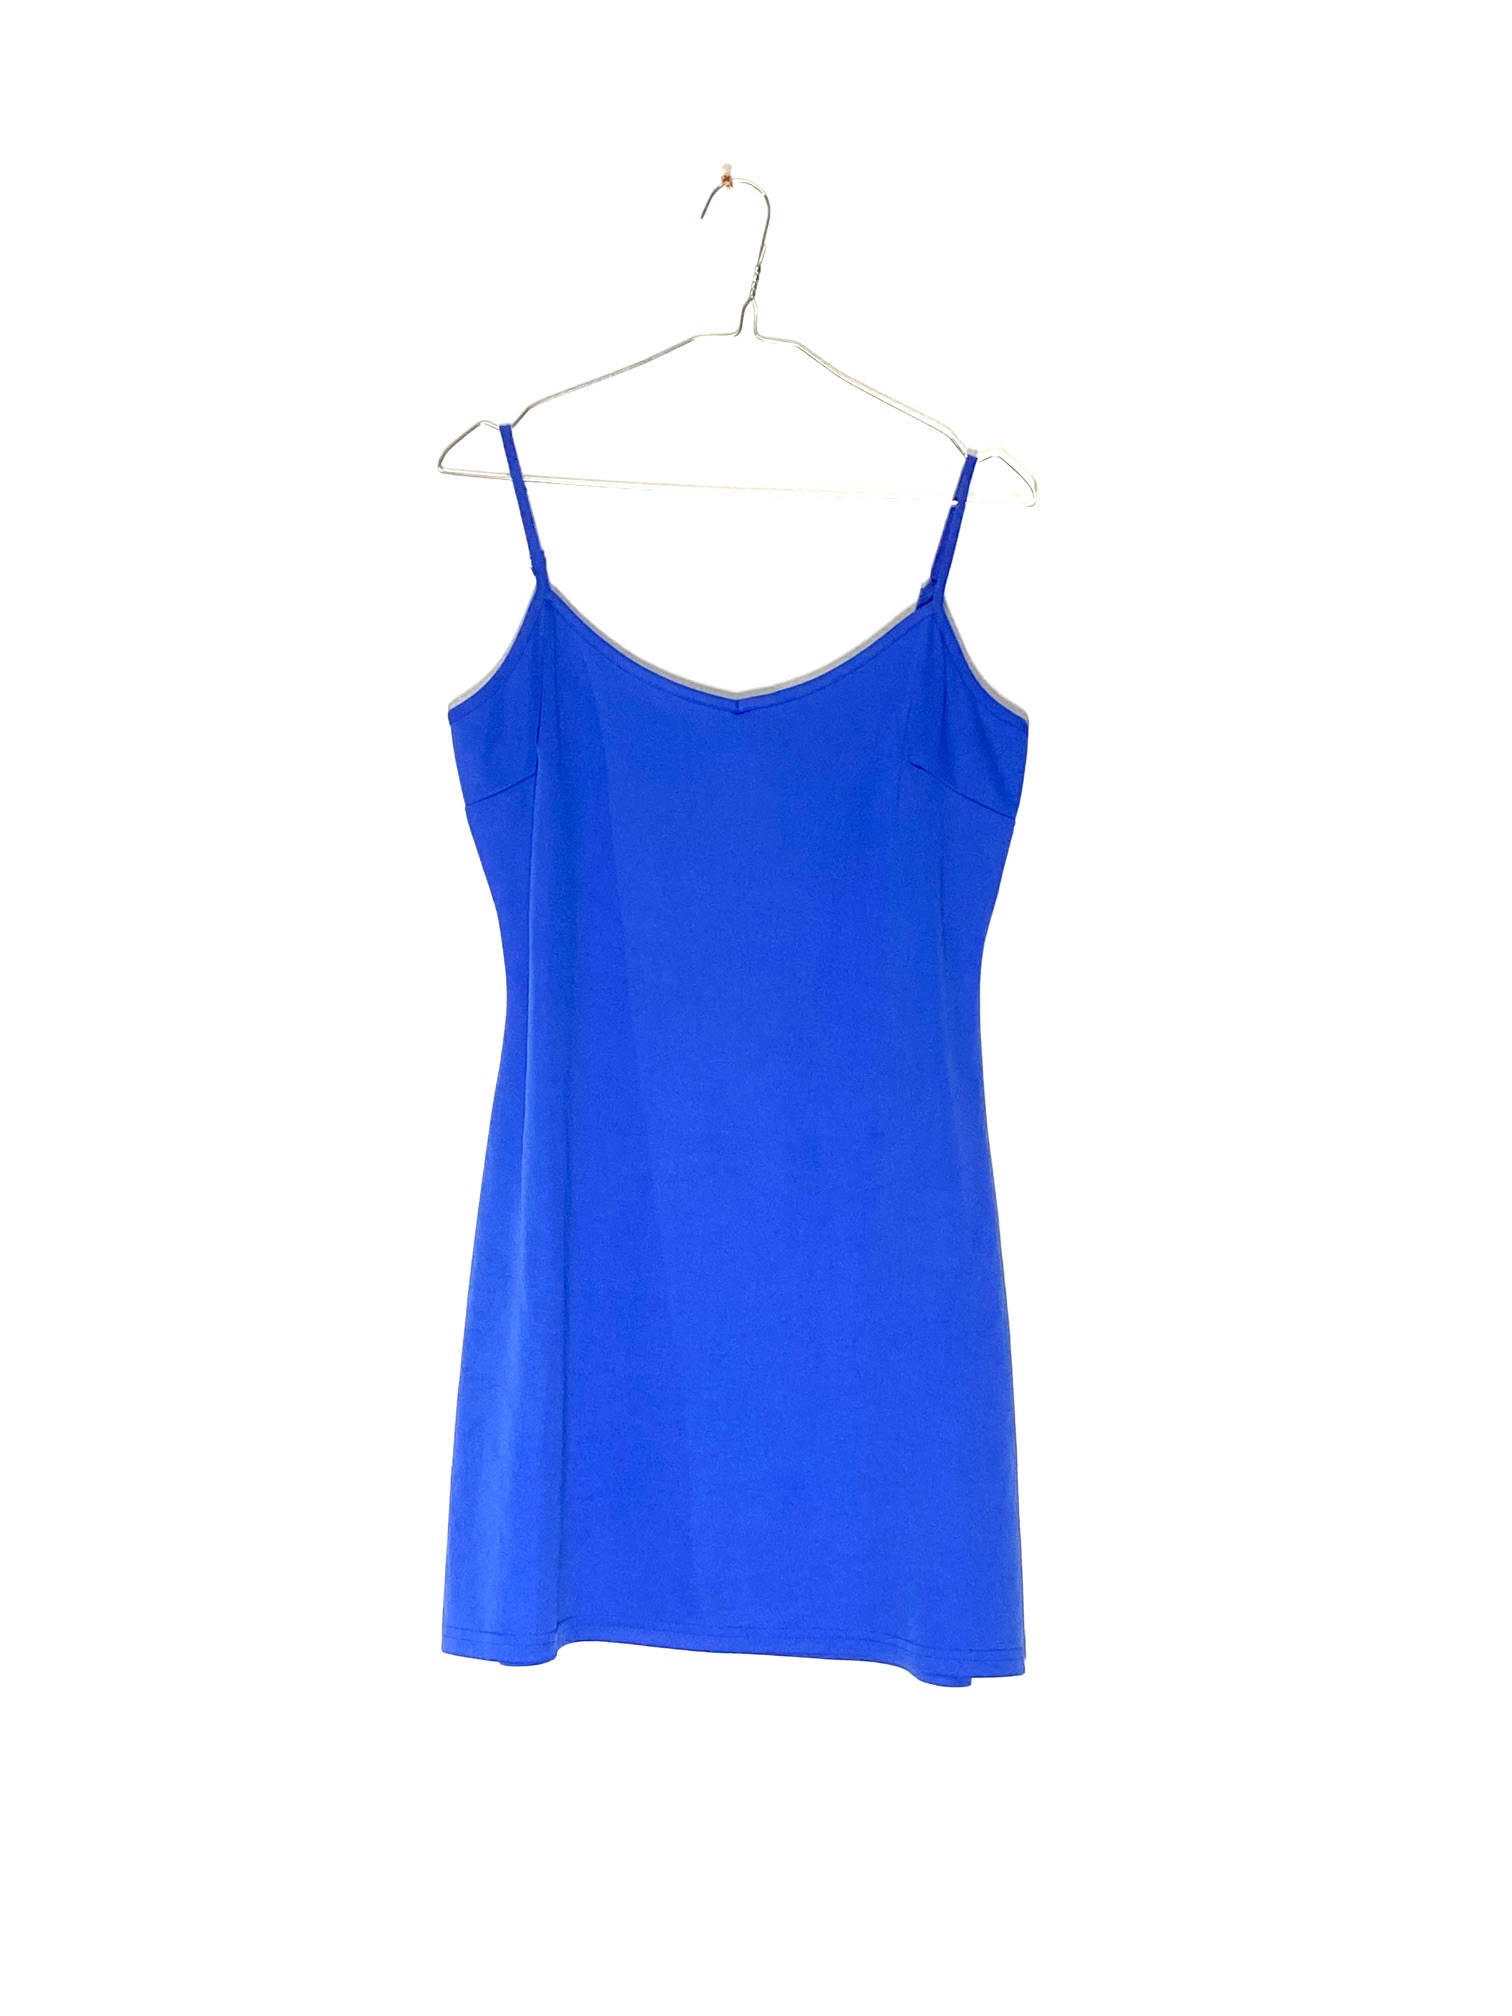 Jeanswest Blue Slip Dress - Size 10 - The Re: Club